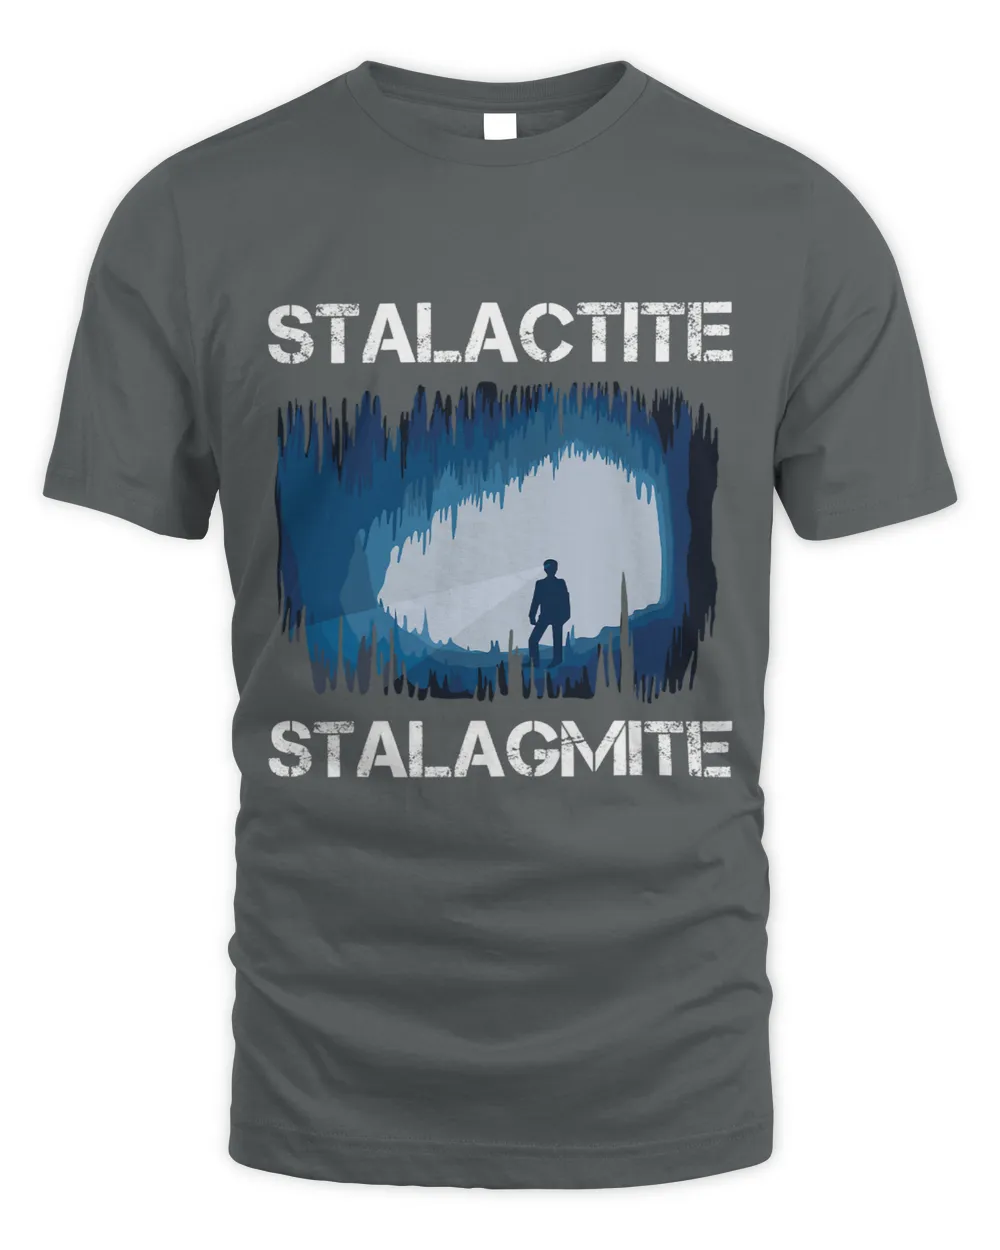 Stalactite Stalagmite Outdoor Speleology Cave Explorer Gift